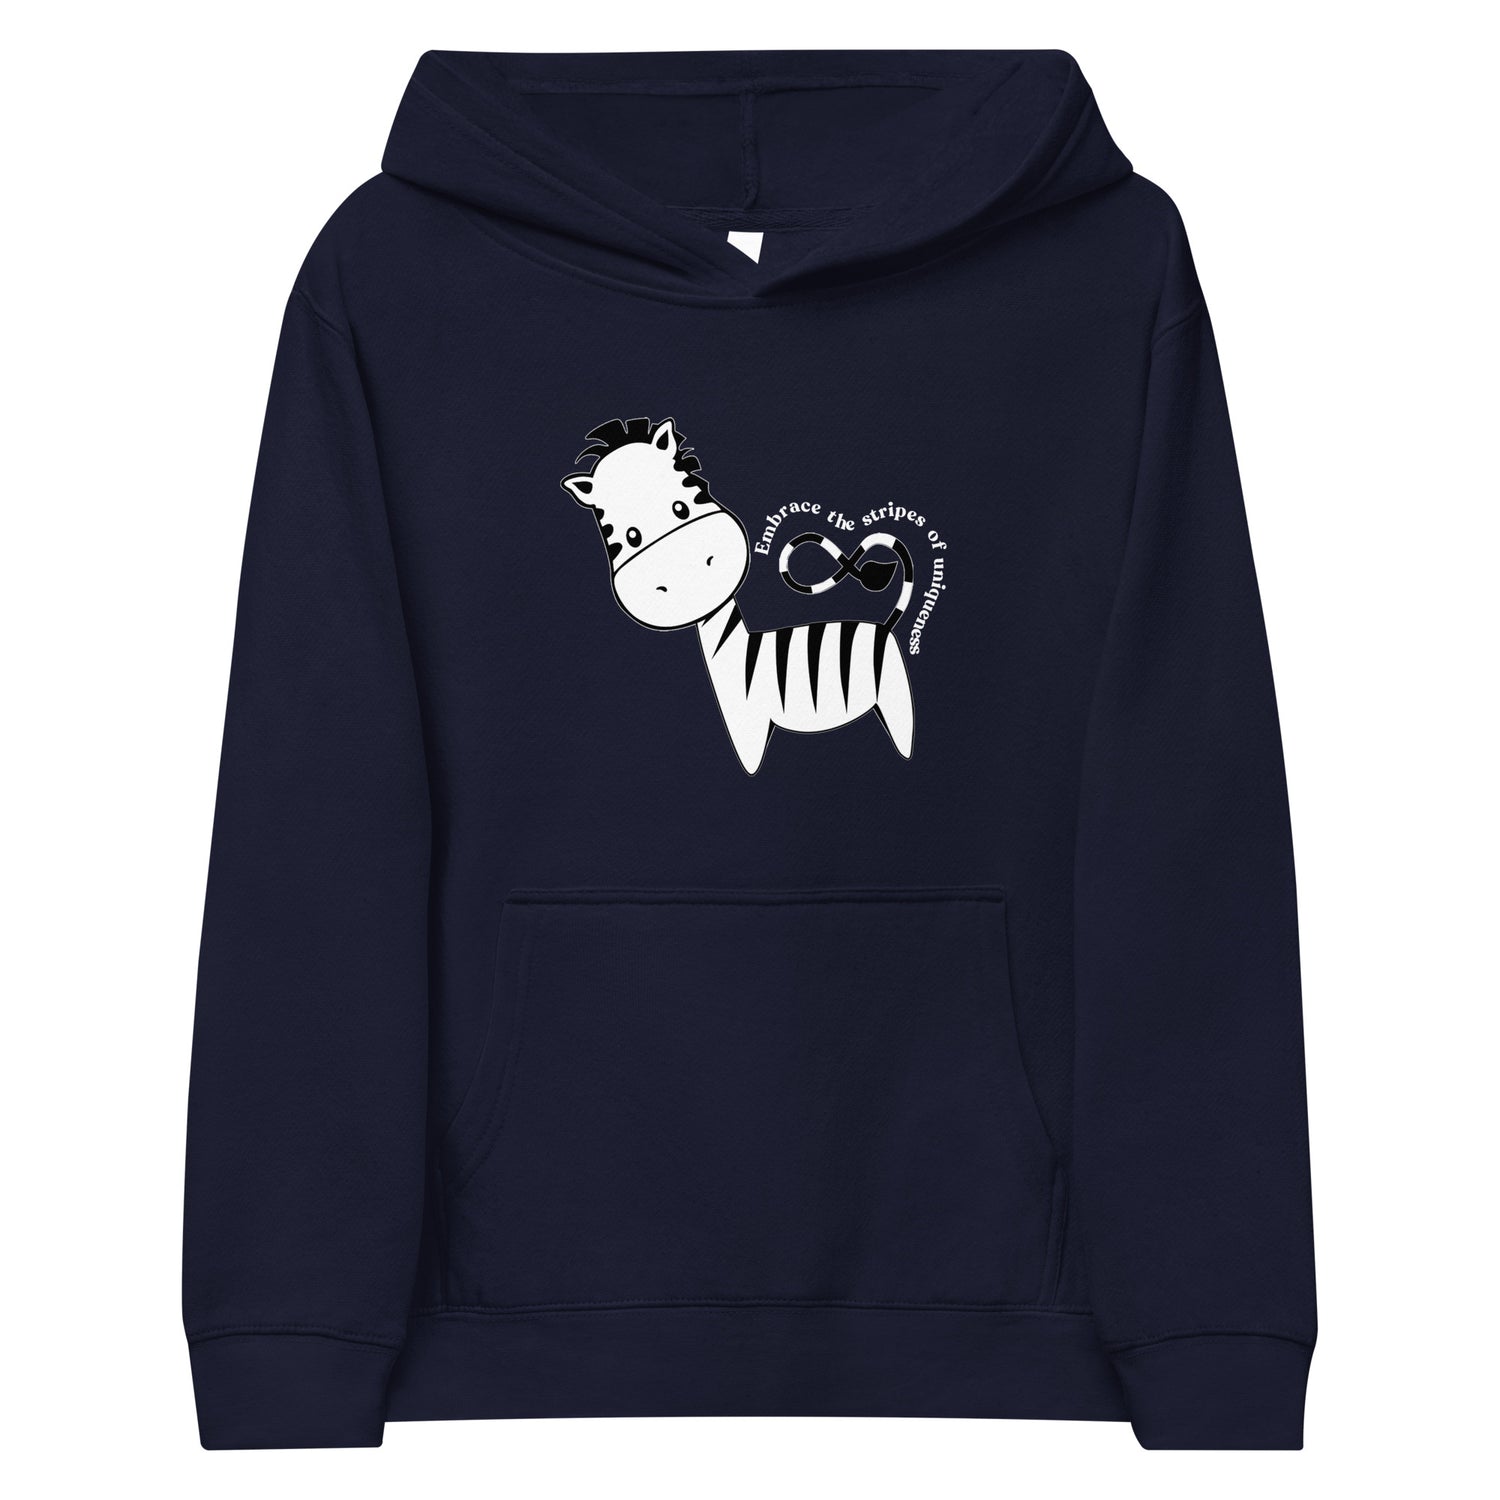 Indigo Kidswear hoodie featuring a zebra print design with pockets at front.